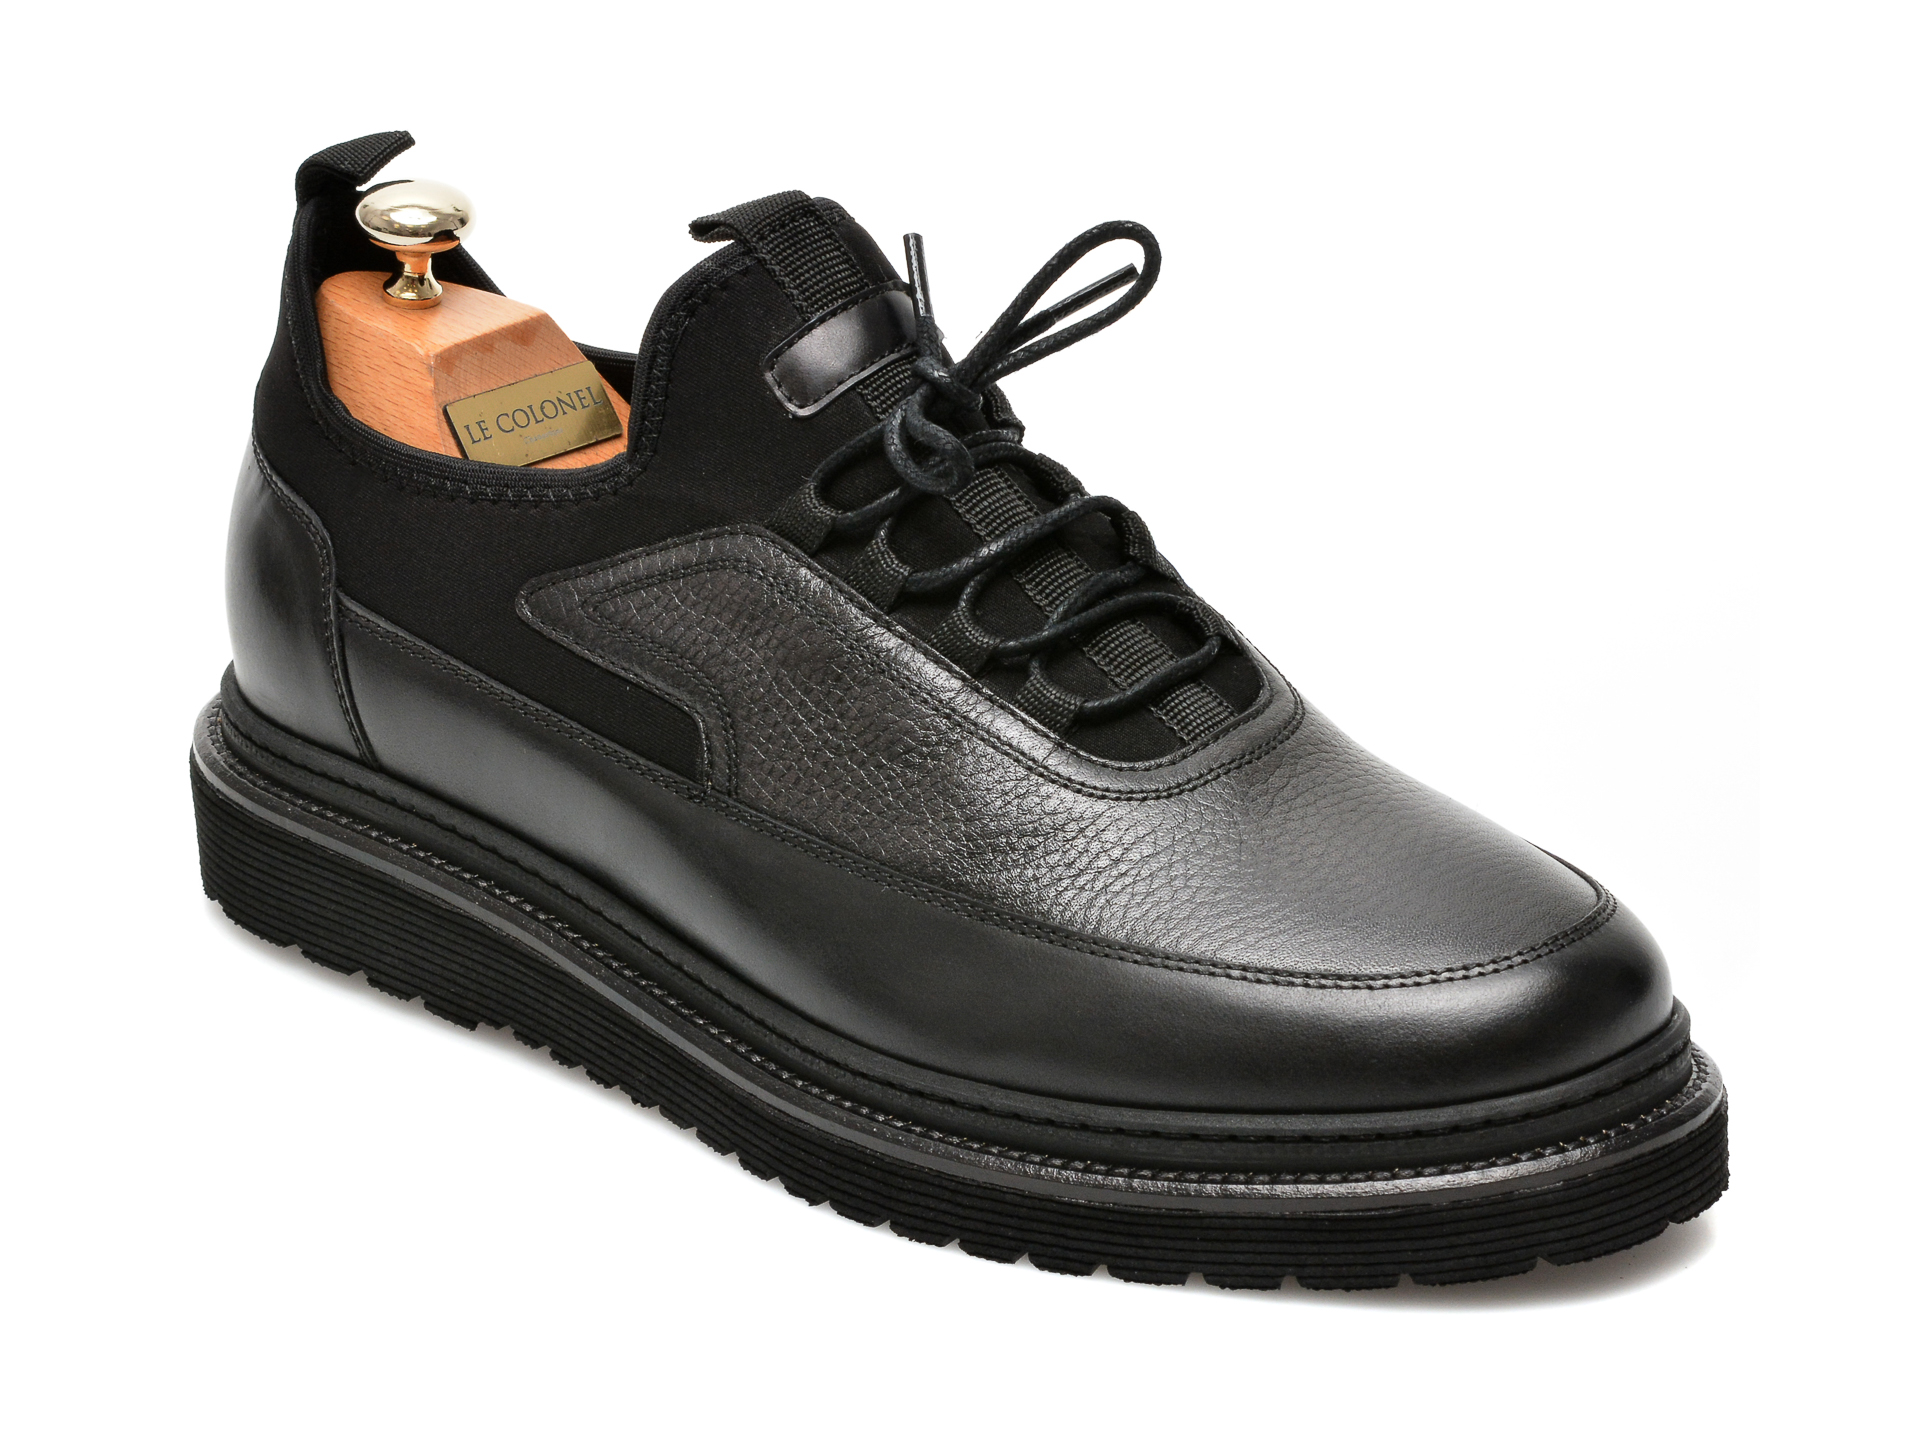 Pantofi LE COLONEL negri, 64816, din material textil si piele naturala Le Colonel